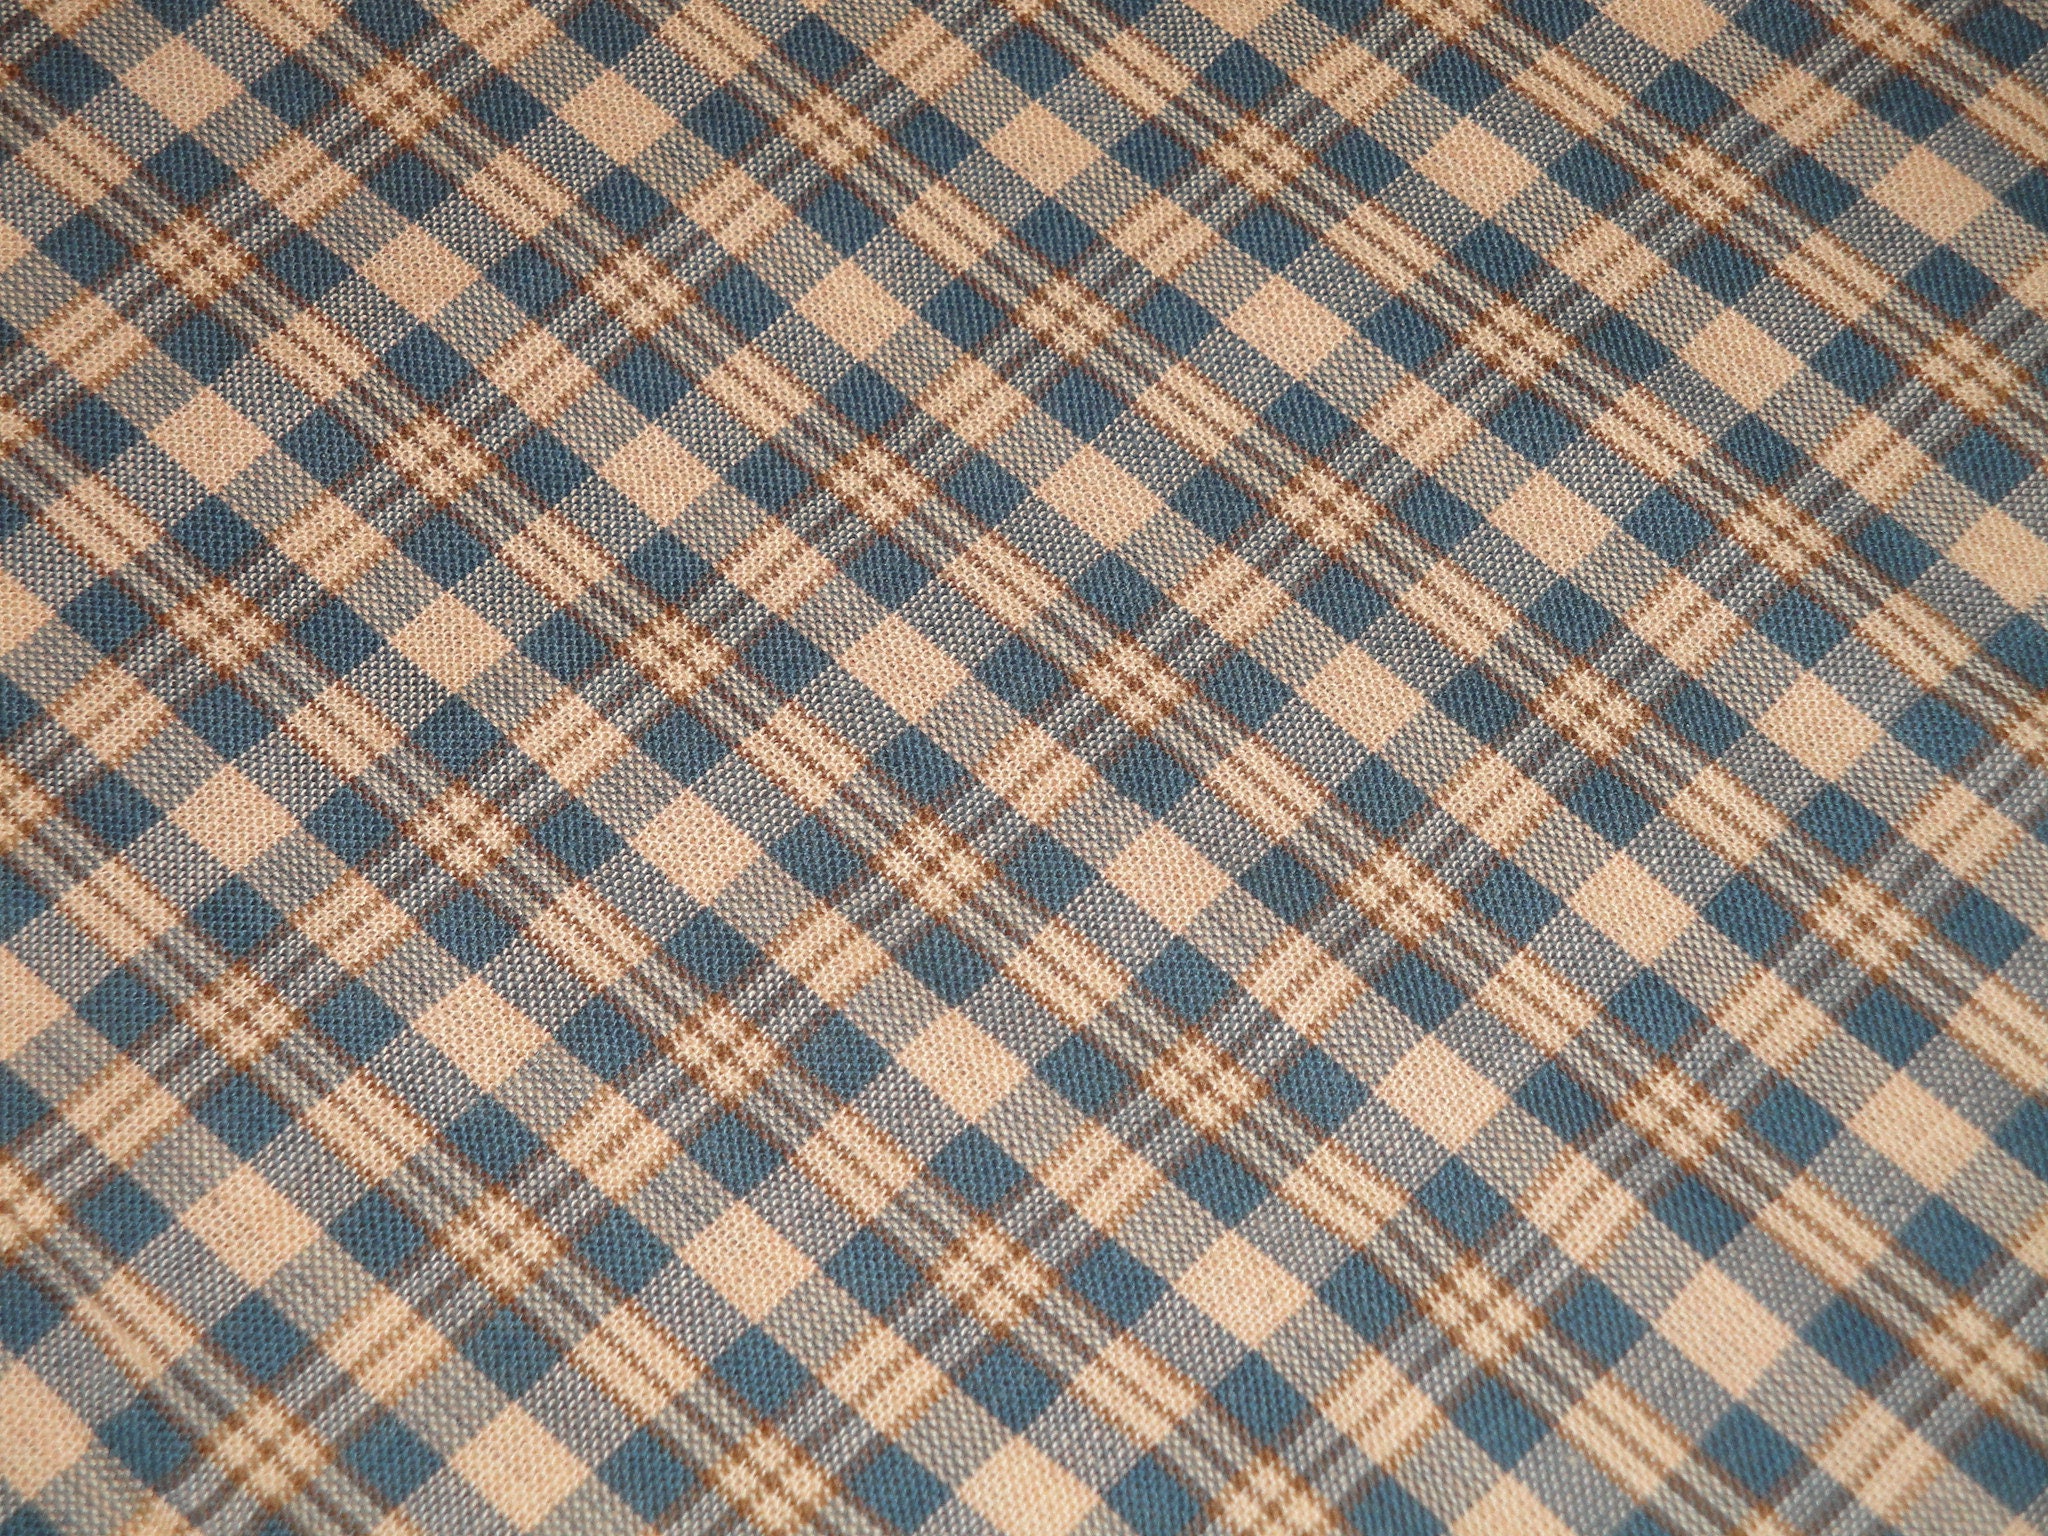 Full Yard - Ginger Blue 5 Plaid Homespun Cotton Fabric - Yahoo Shopping